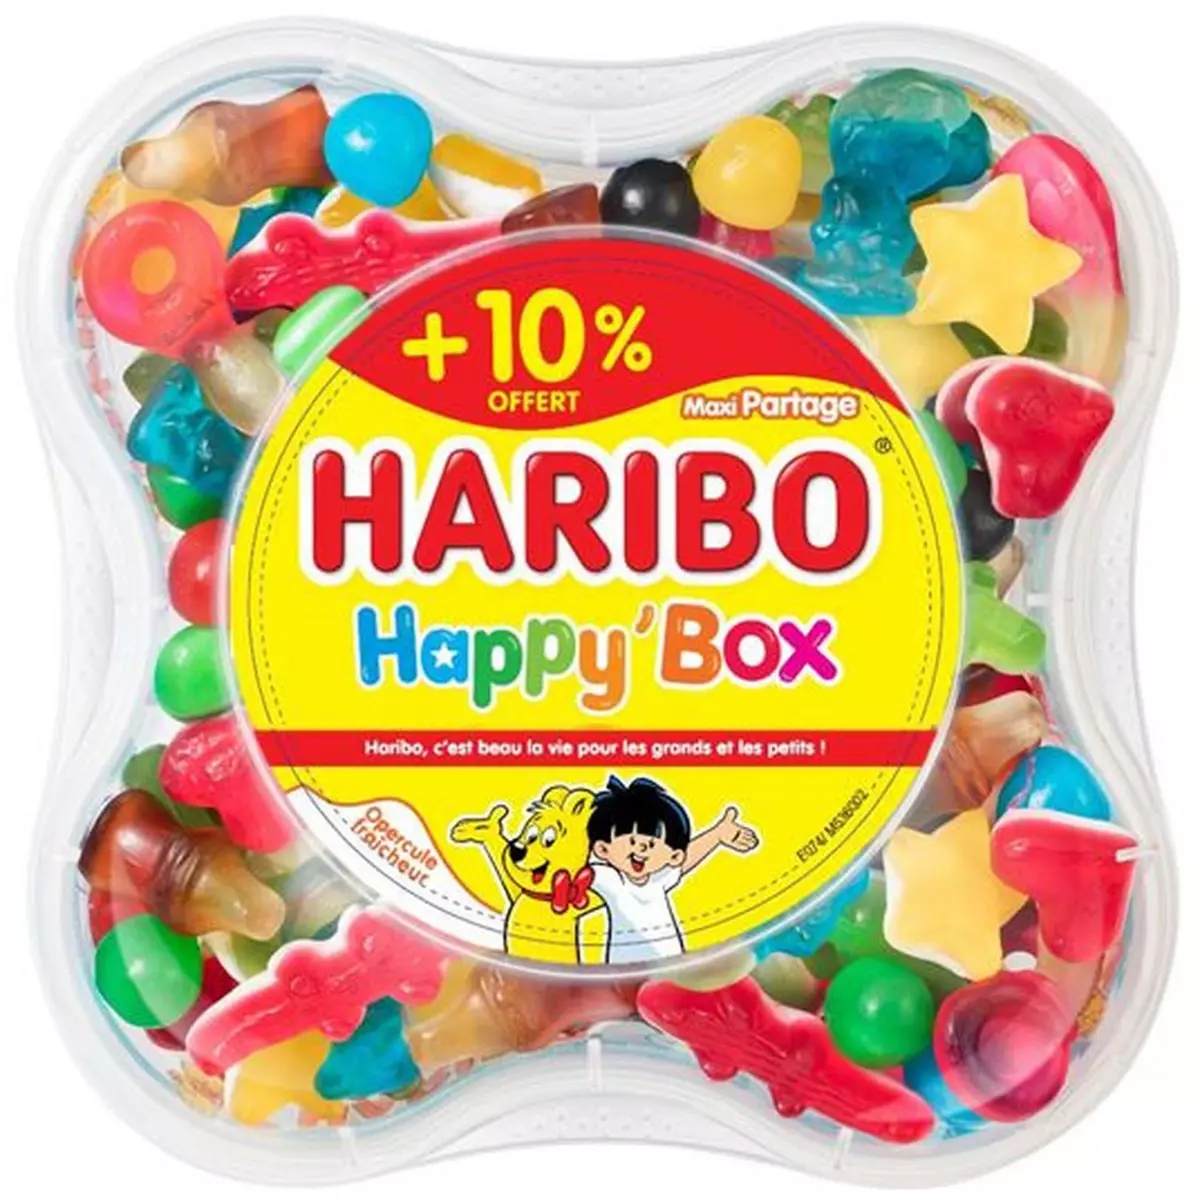 HARIBO Happy box assortiment de bonbons 935g dont 10% offert